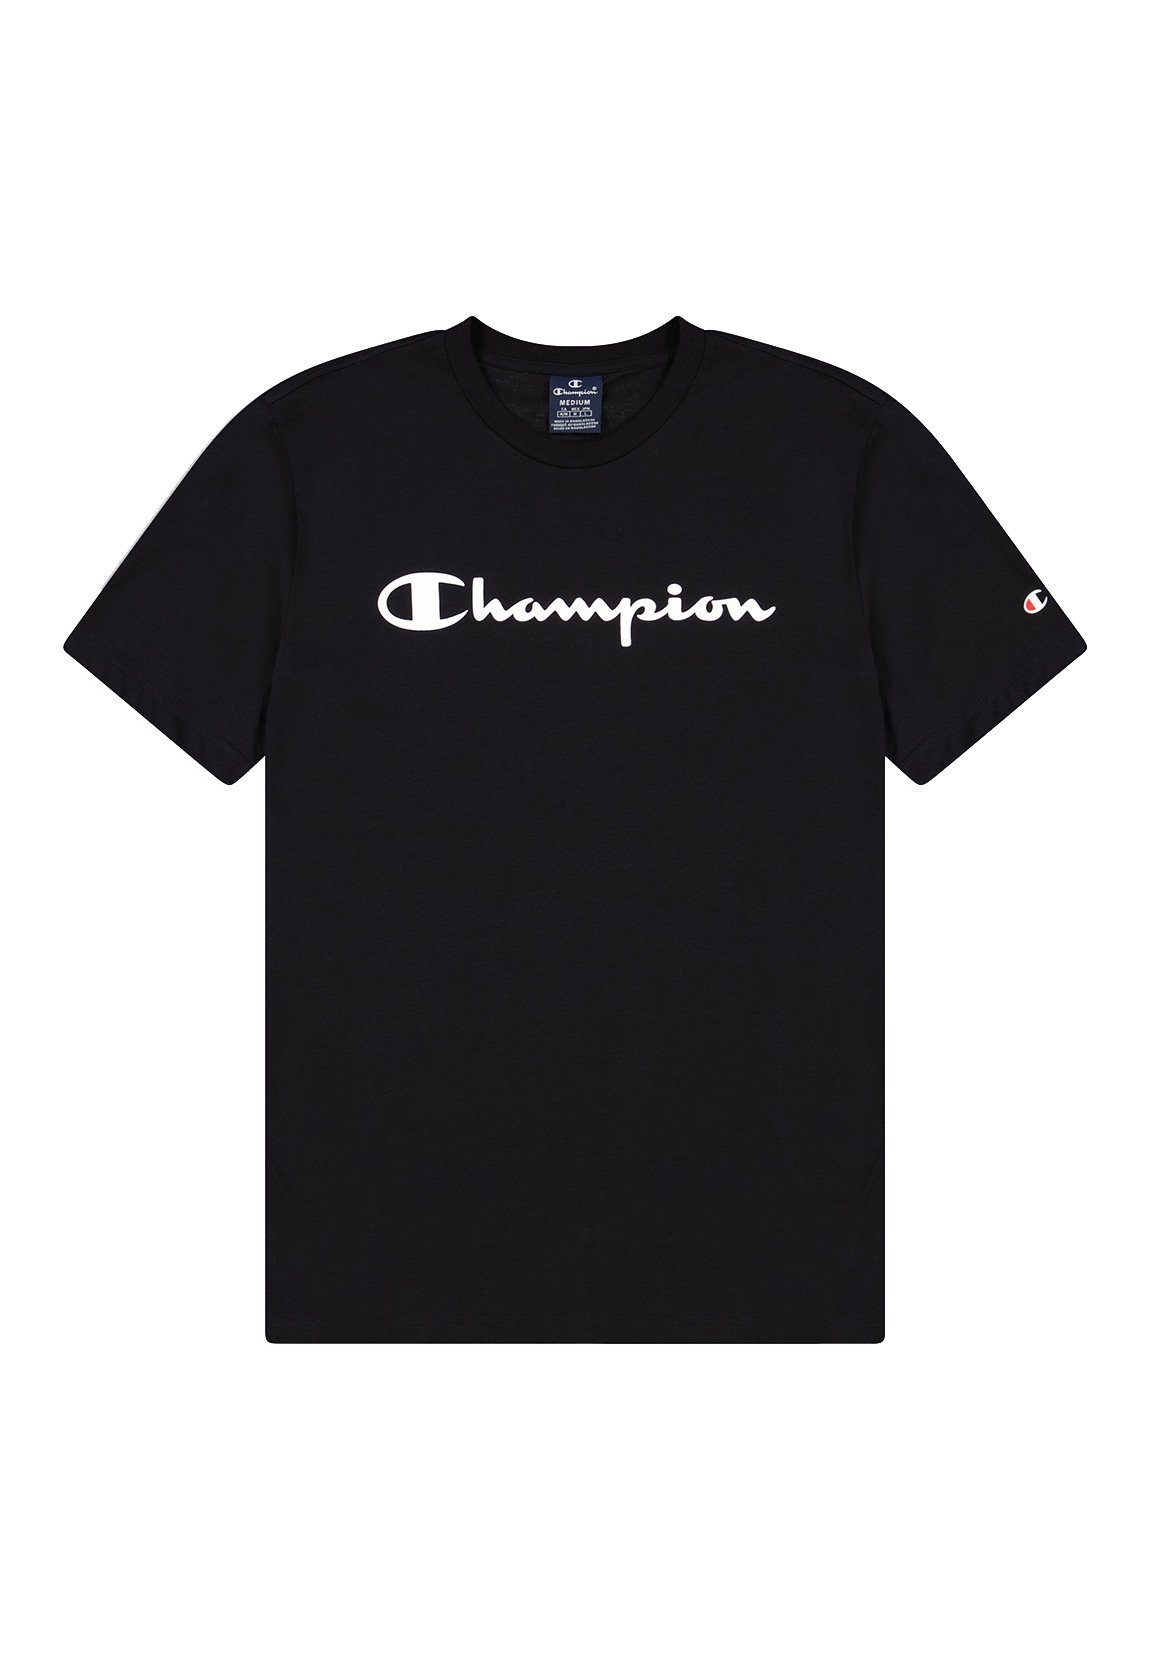 Champion T-Shirt Champion Herren T-Shirt 219098 KK001 NBK Schwarz